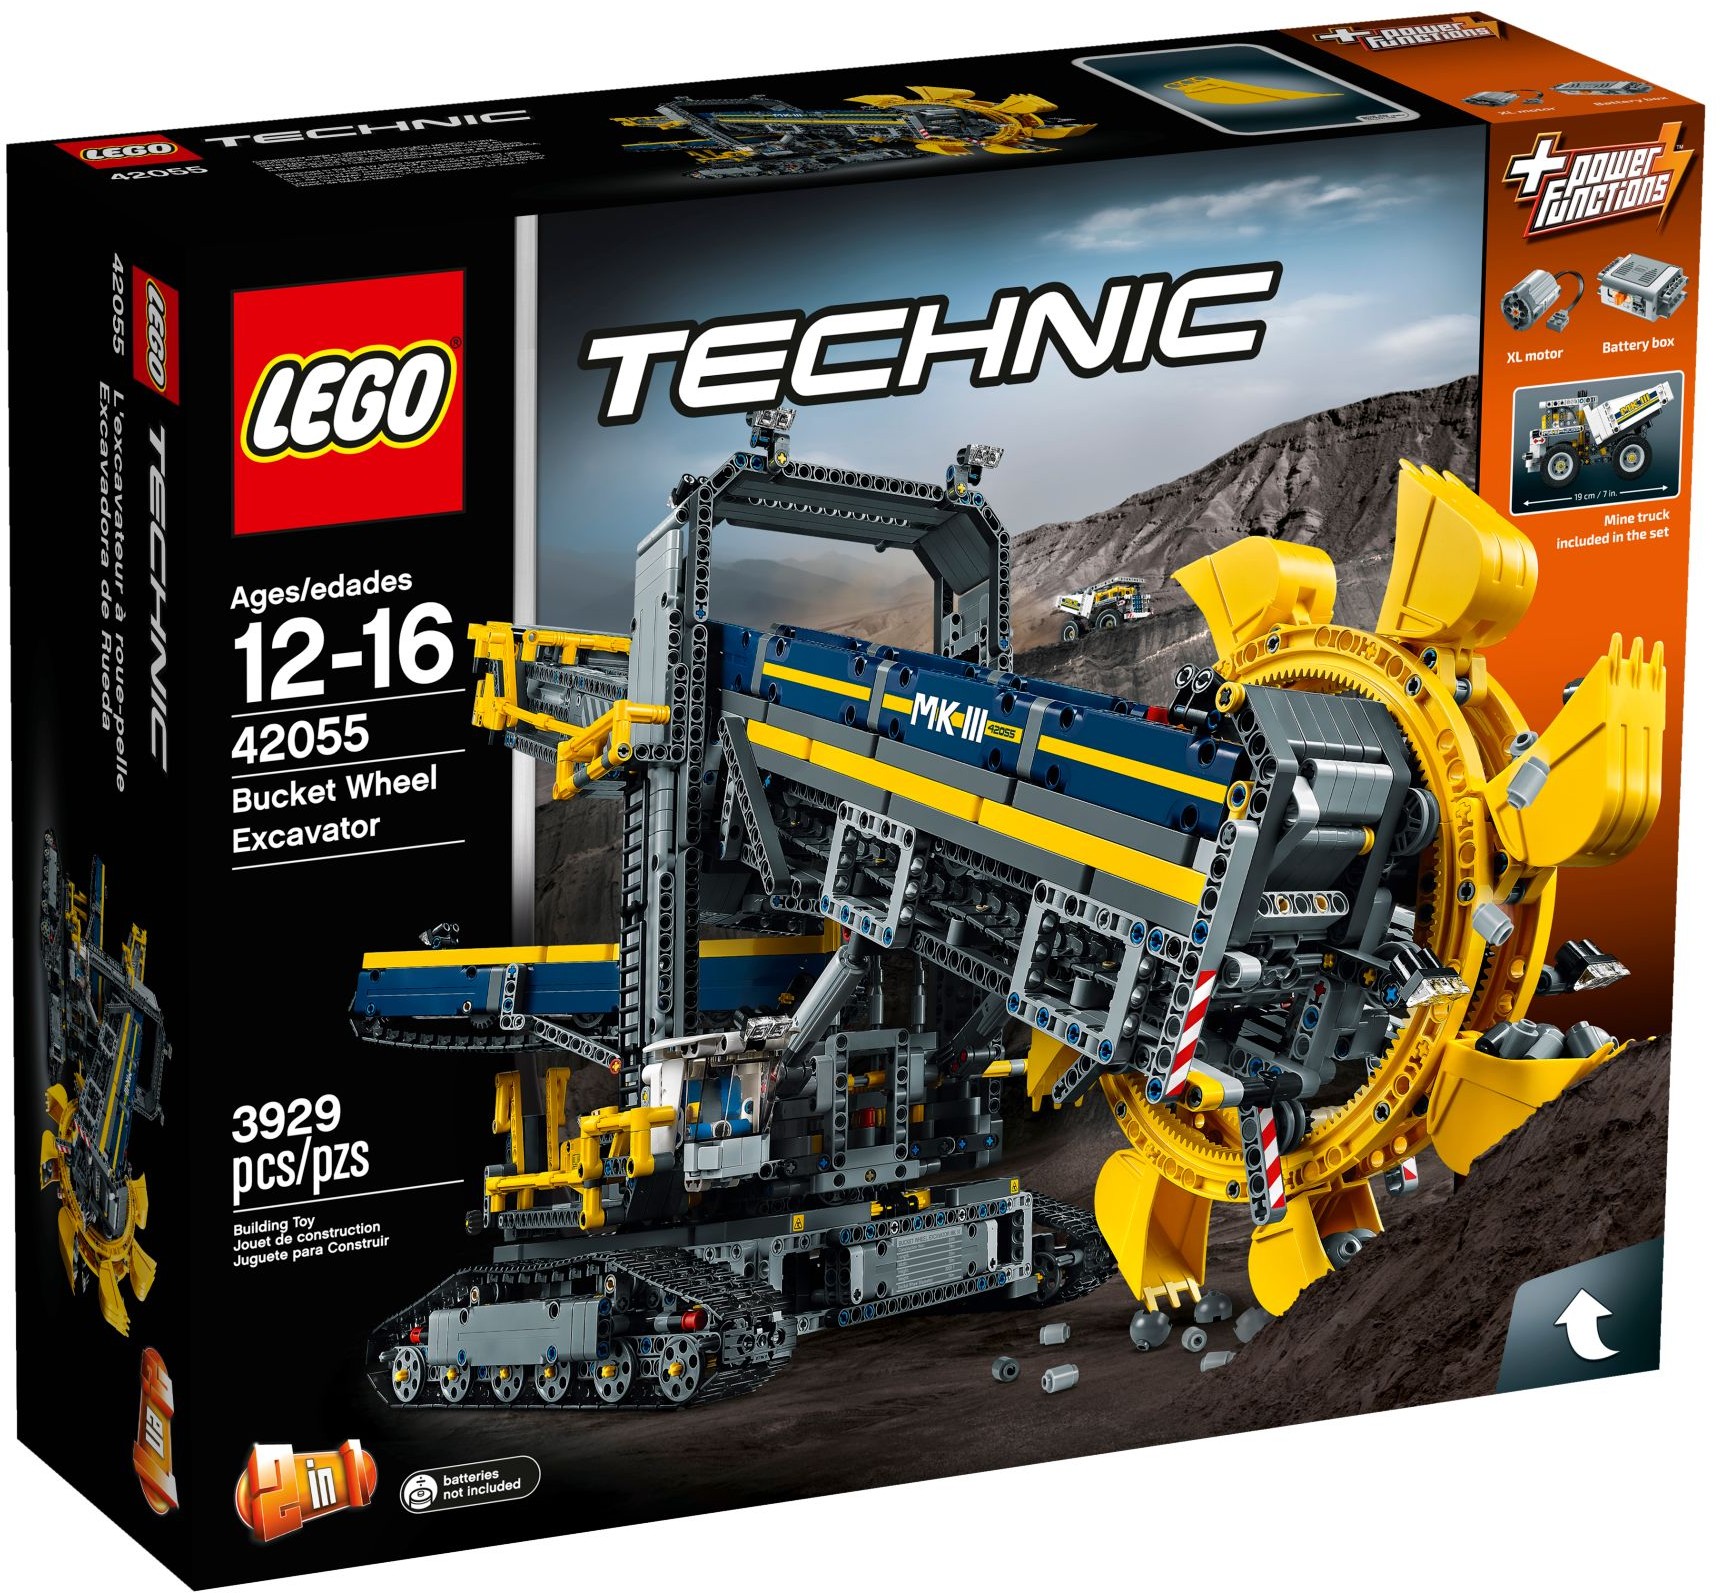 Lego 42055 Bucket Wheel Excavator Lego Technic set for sale best price